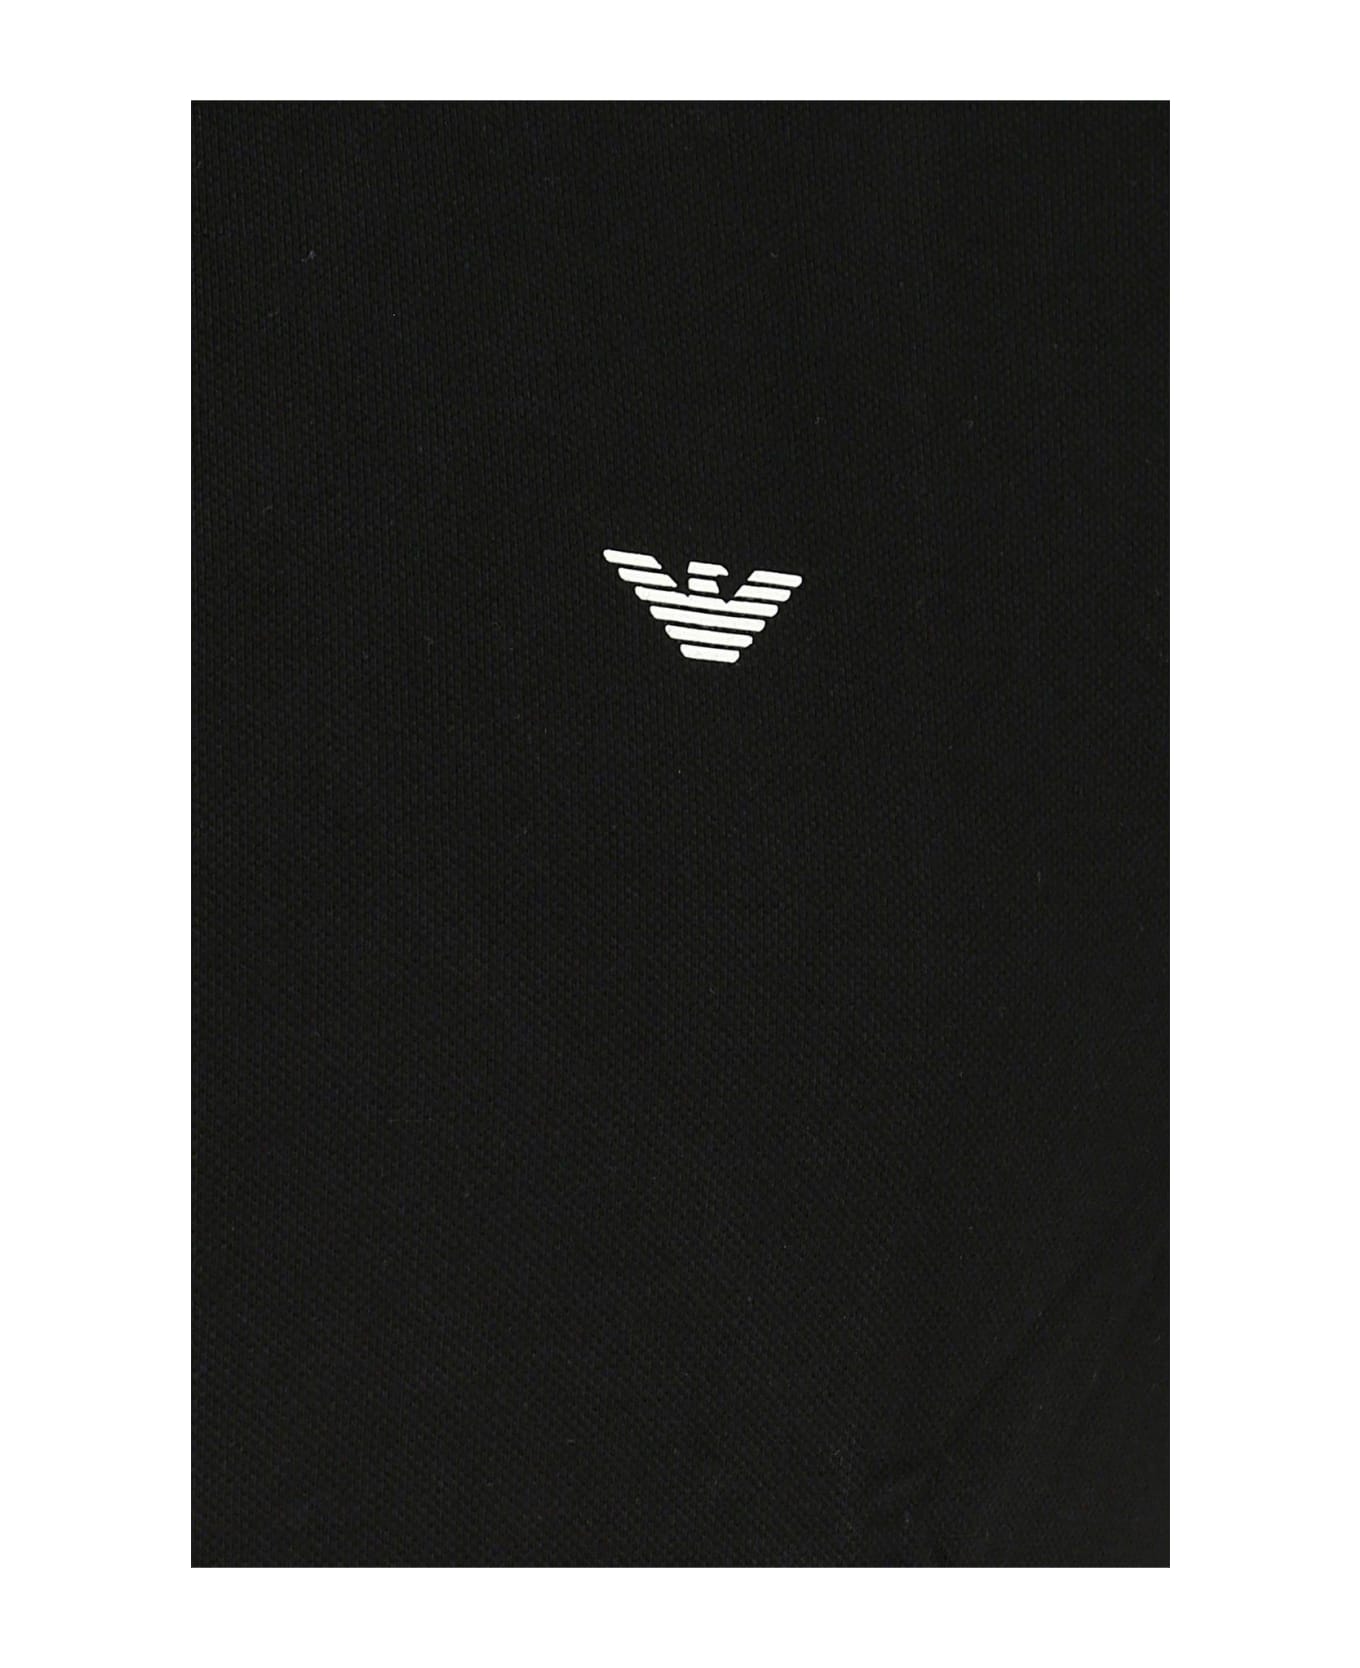 Emporio Armani Black Stretch Cotton Polo Shirt - Black シャツ